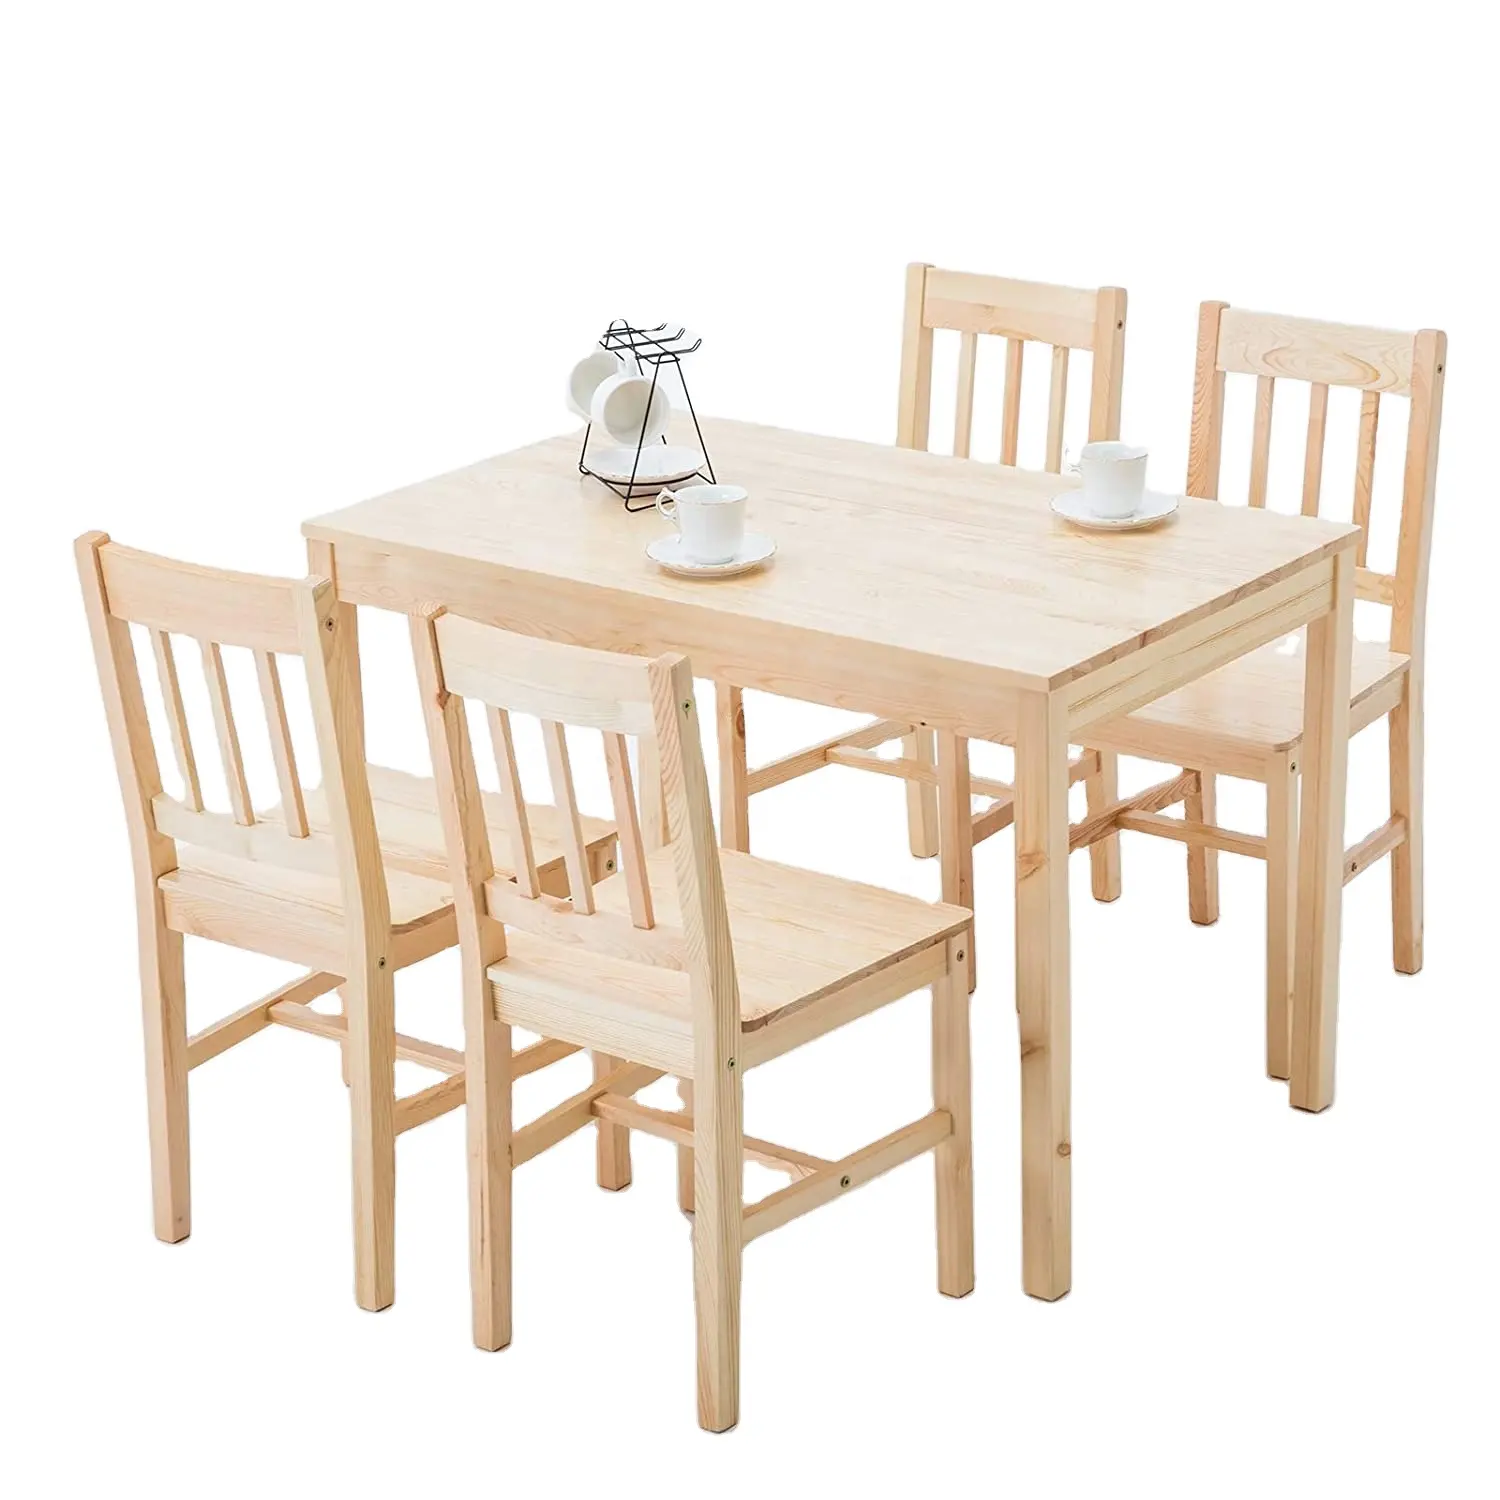 Mecor ชุดโต๊ะเก้าอี้รับประทานอาหาร,ไม้สนสีขาว/น้ำผึ้งสไตล์คลาสสิก4ชิ้นเฟอร์นิเจอร์ในห้องอาหารห้องครัว